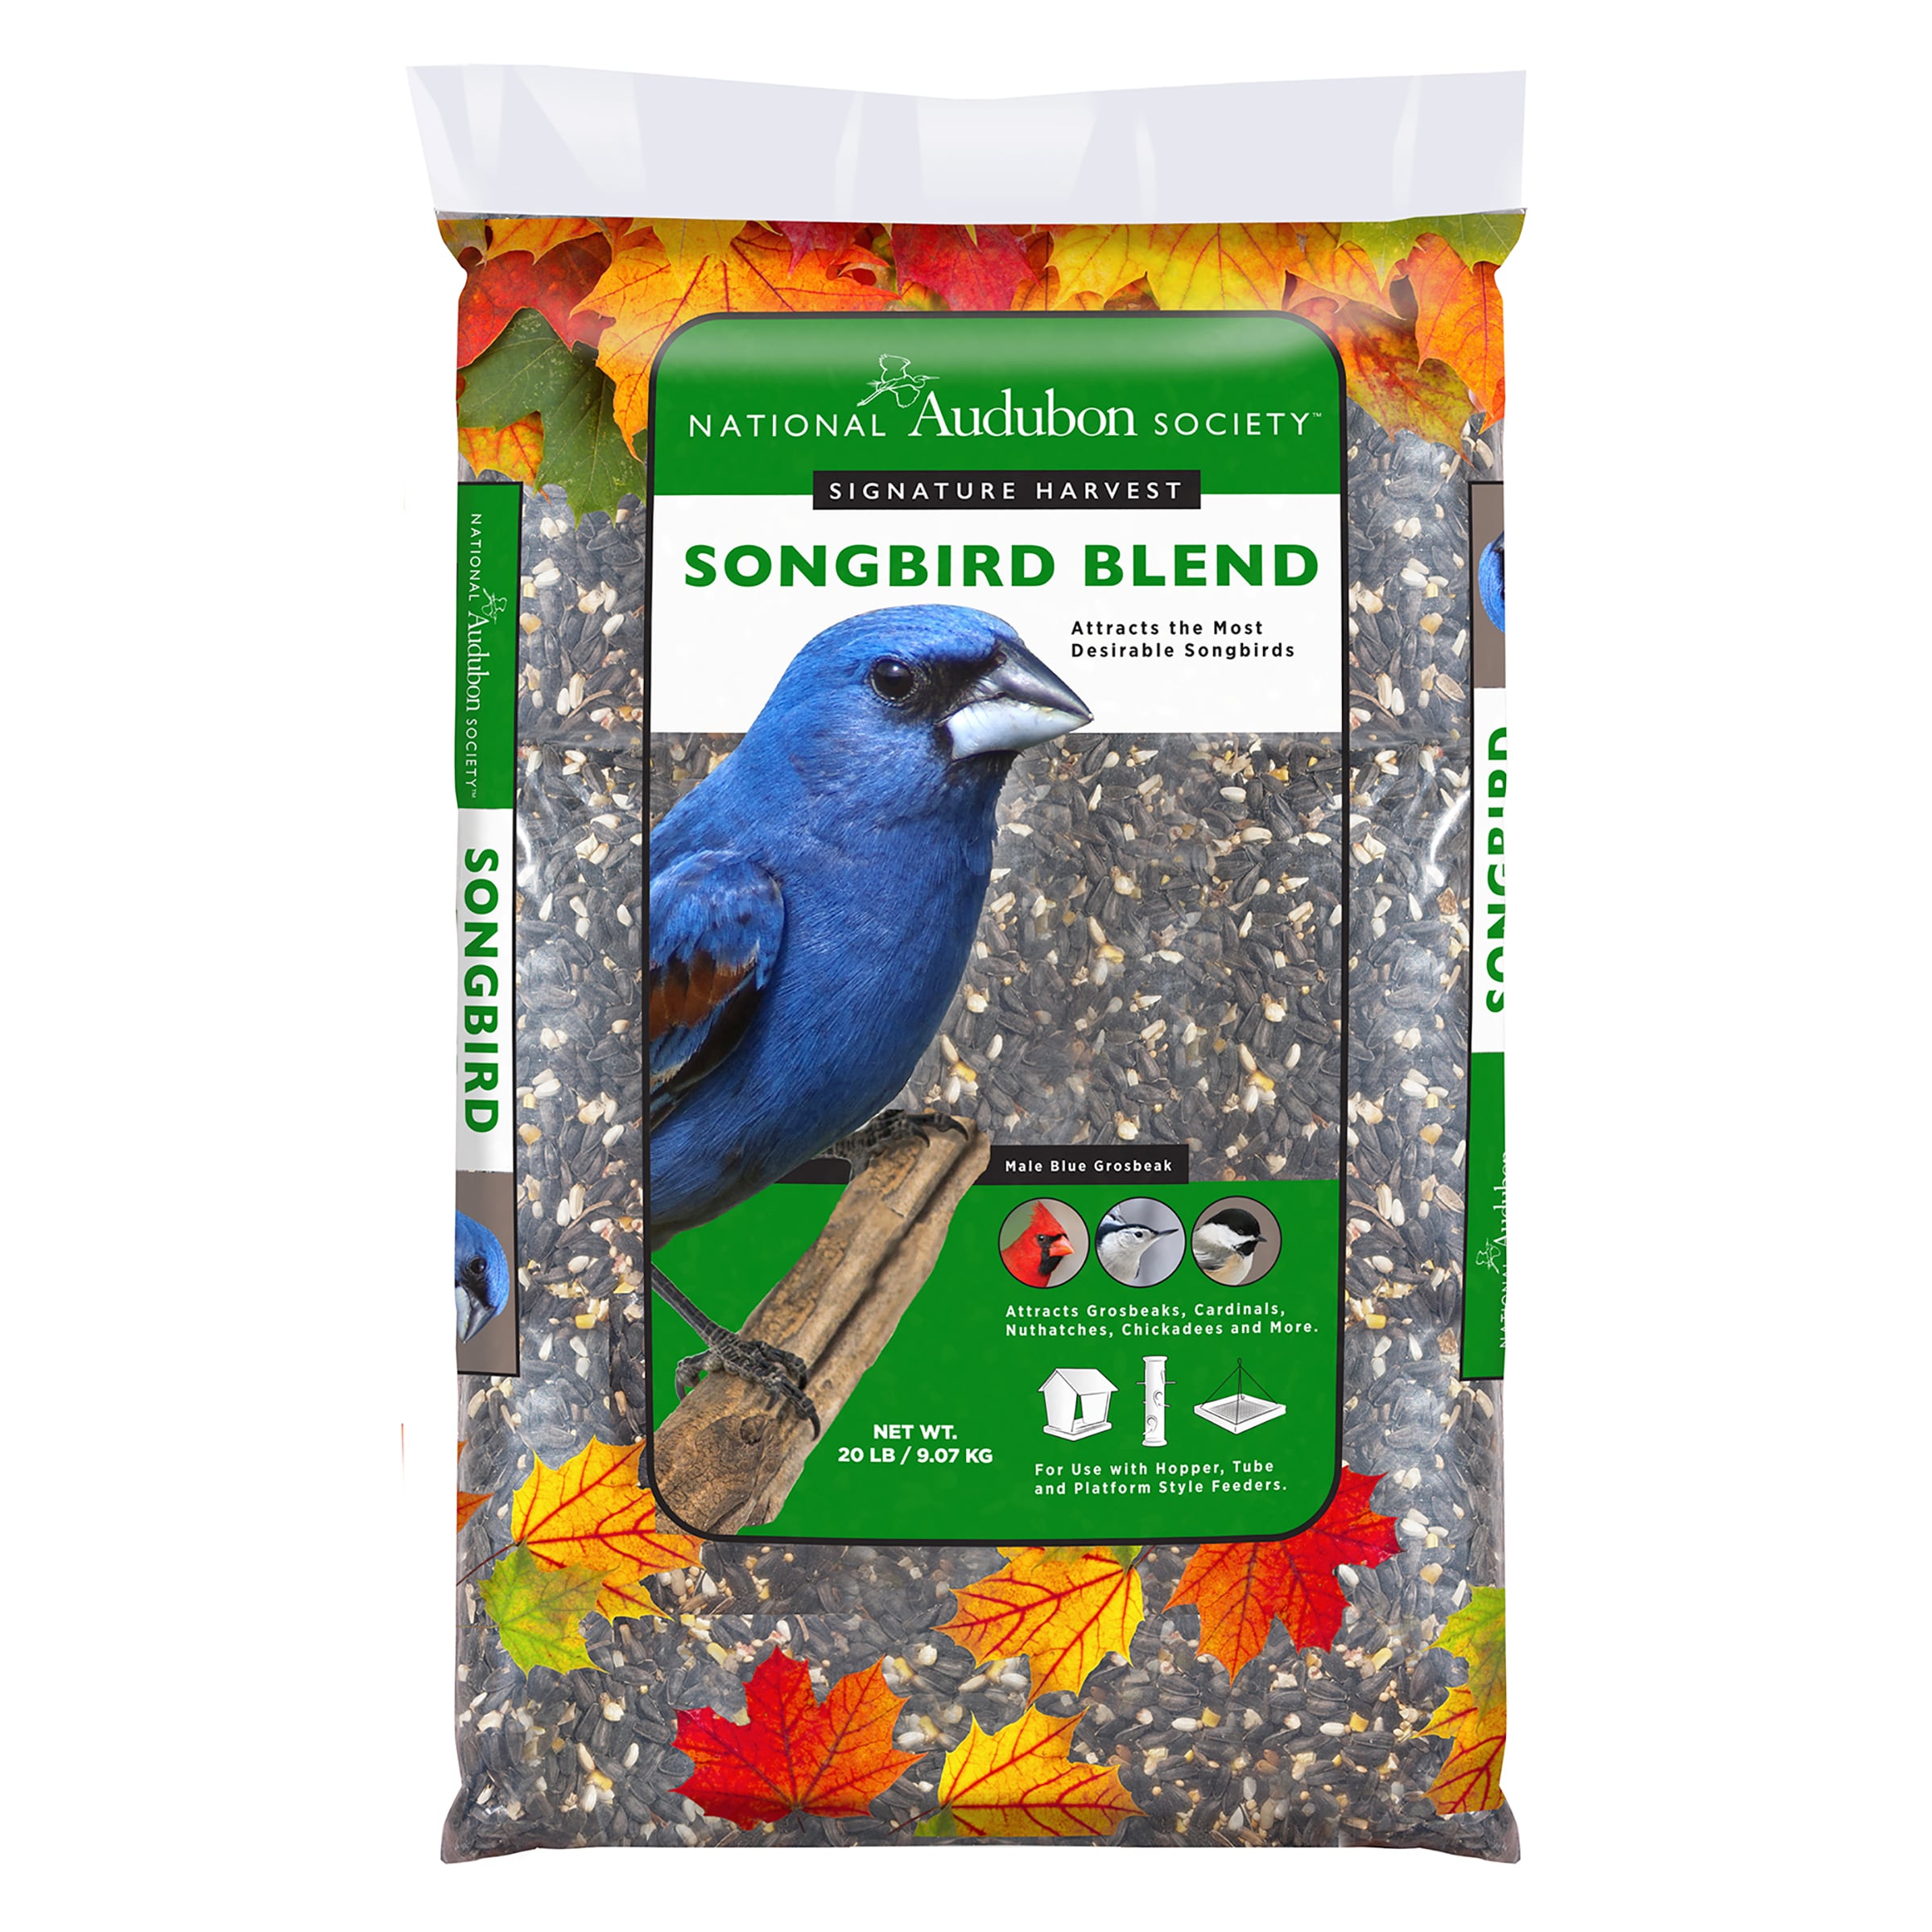 Audubon Park Waste Free Wild Bird Food, Dry, 15 lbs.